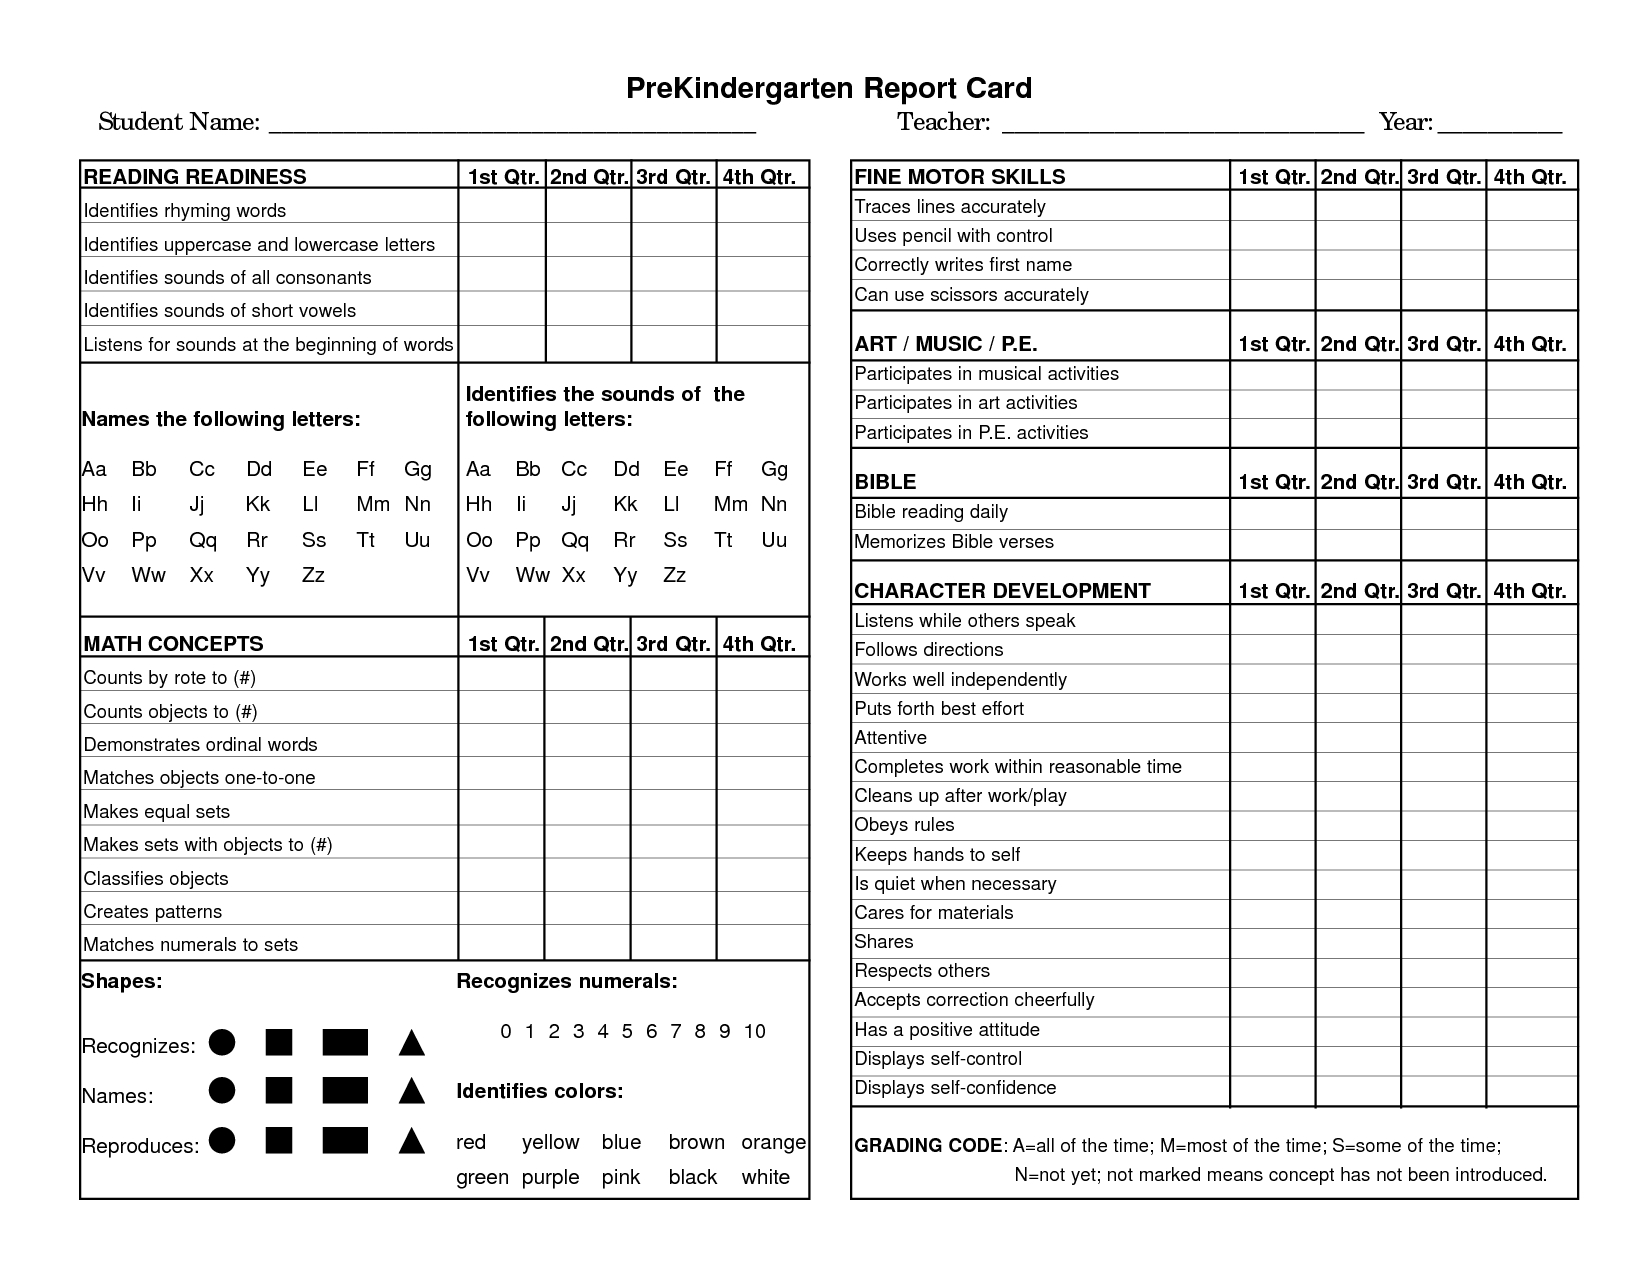 Free Printable Preschool Report Cards Free Printable